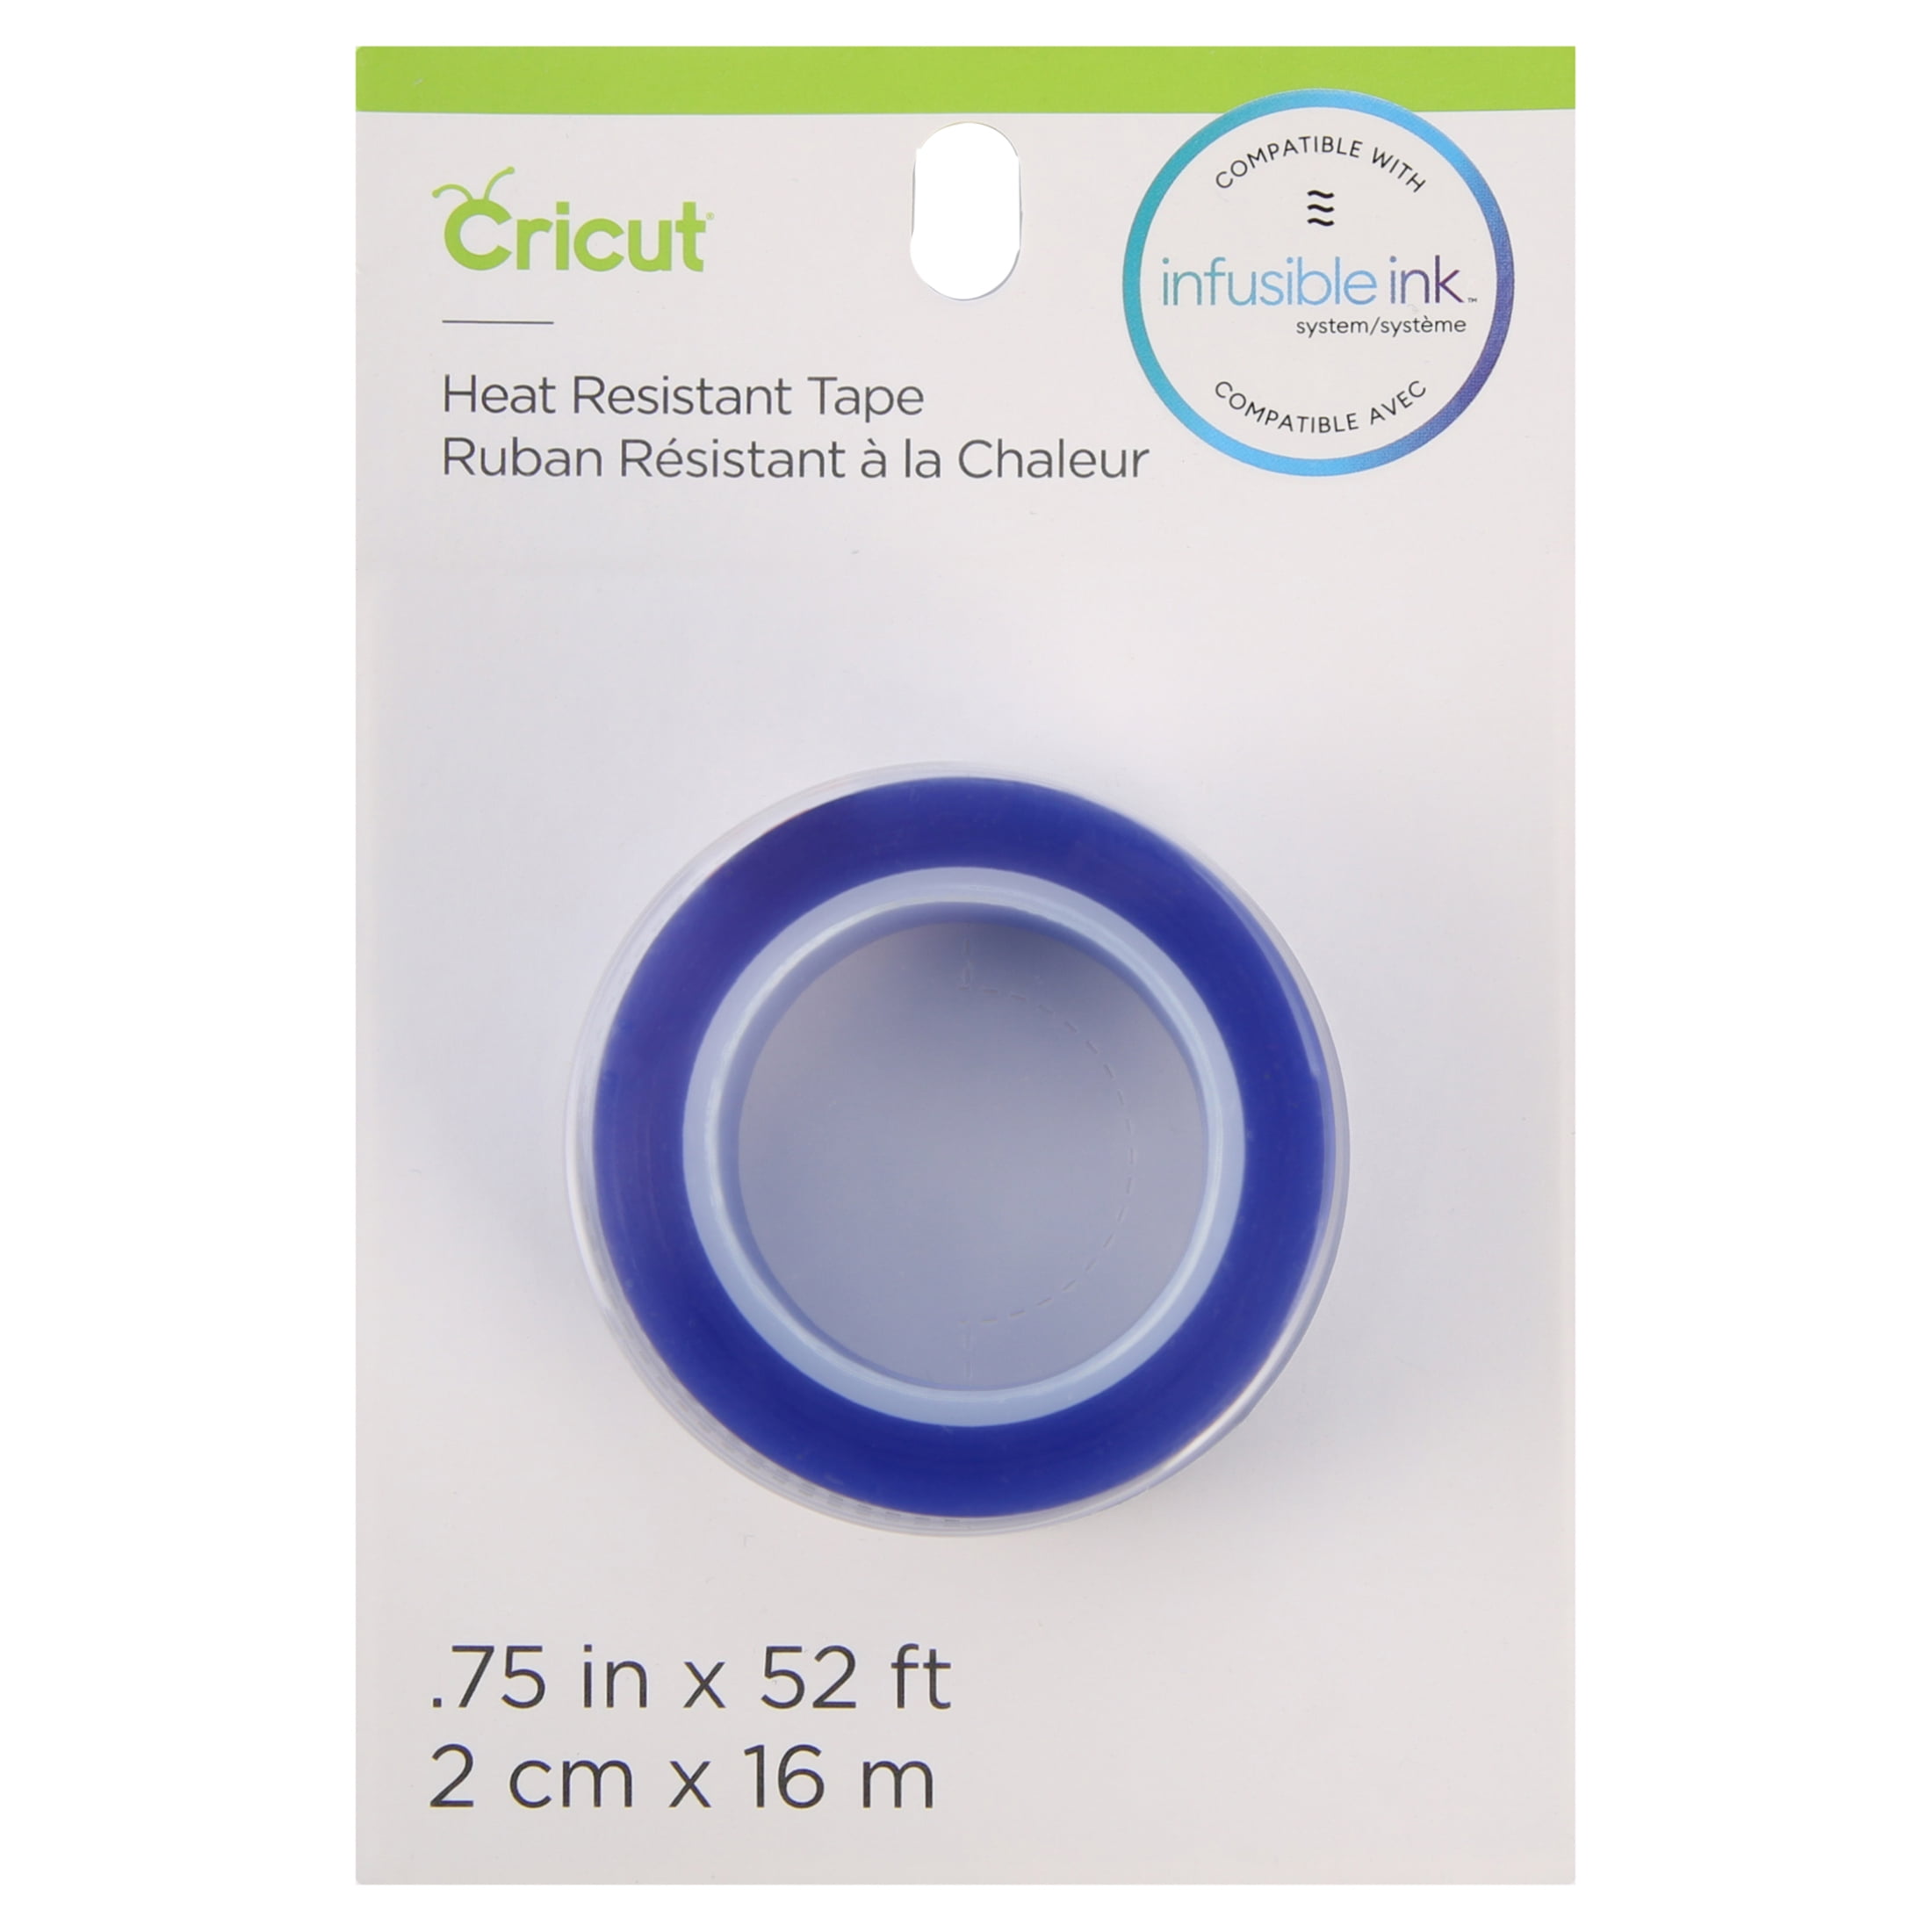 2006951: Cricut Heat Resistant Tape; 1 Roll 2 Cm X 16 M